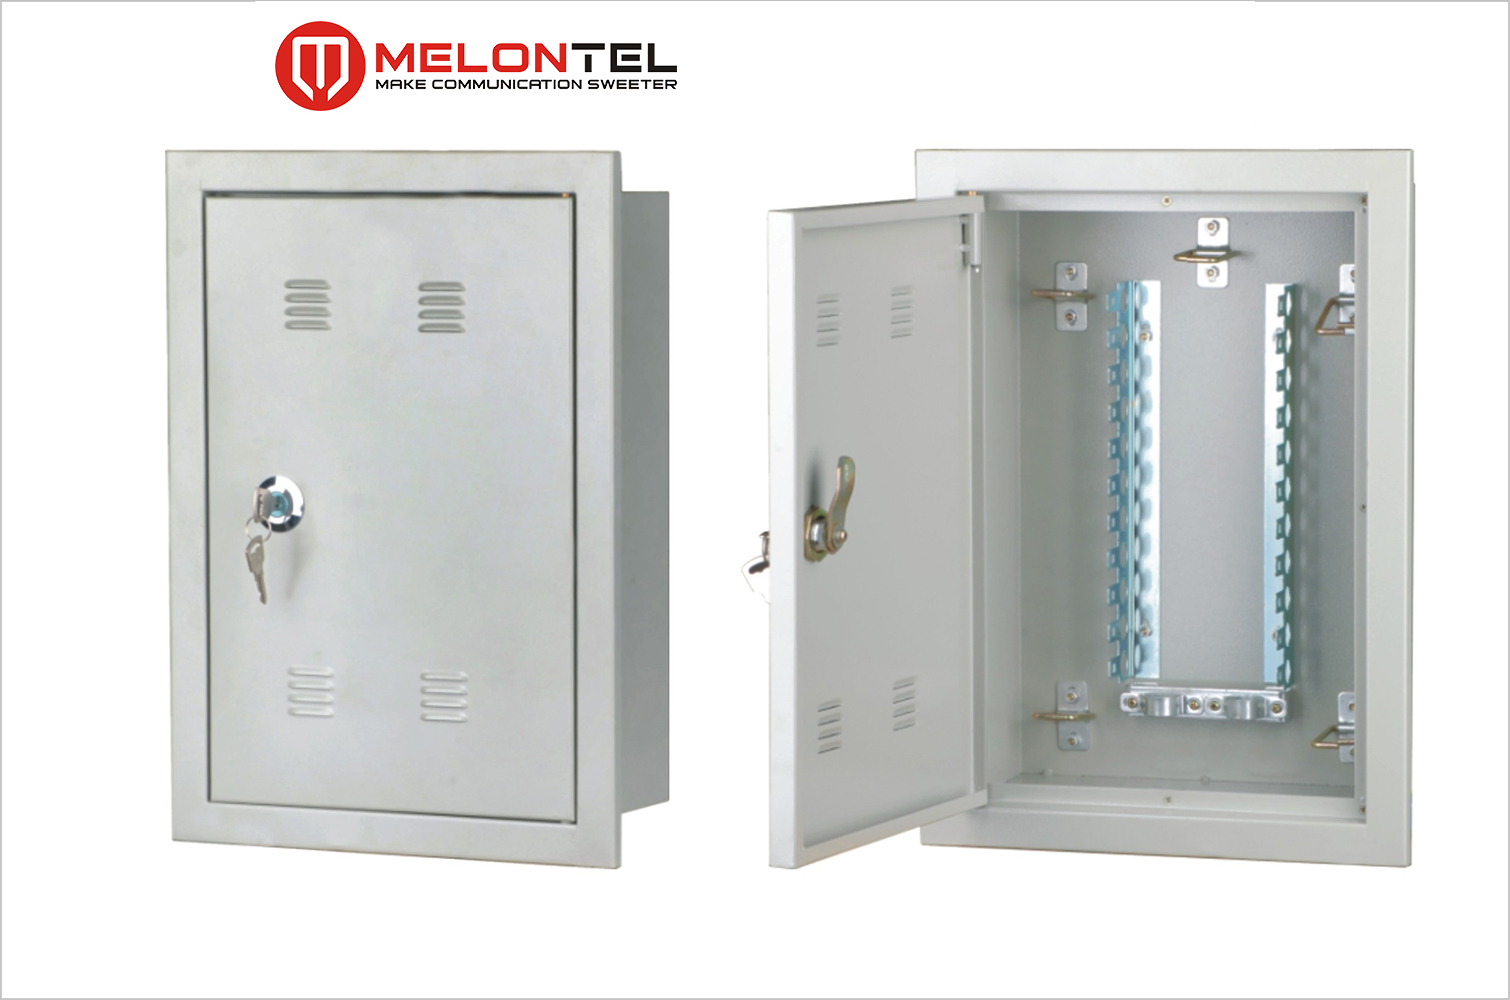 MT-2354 indoor 100 pair distribution box with lock